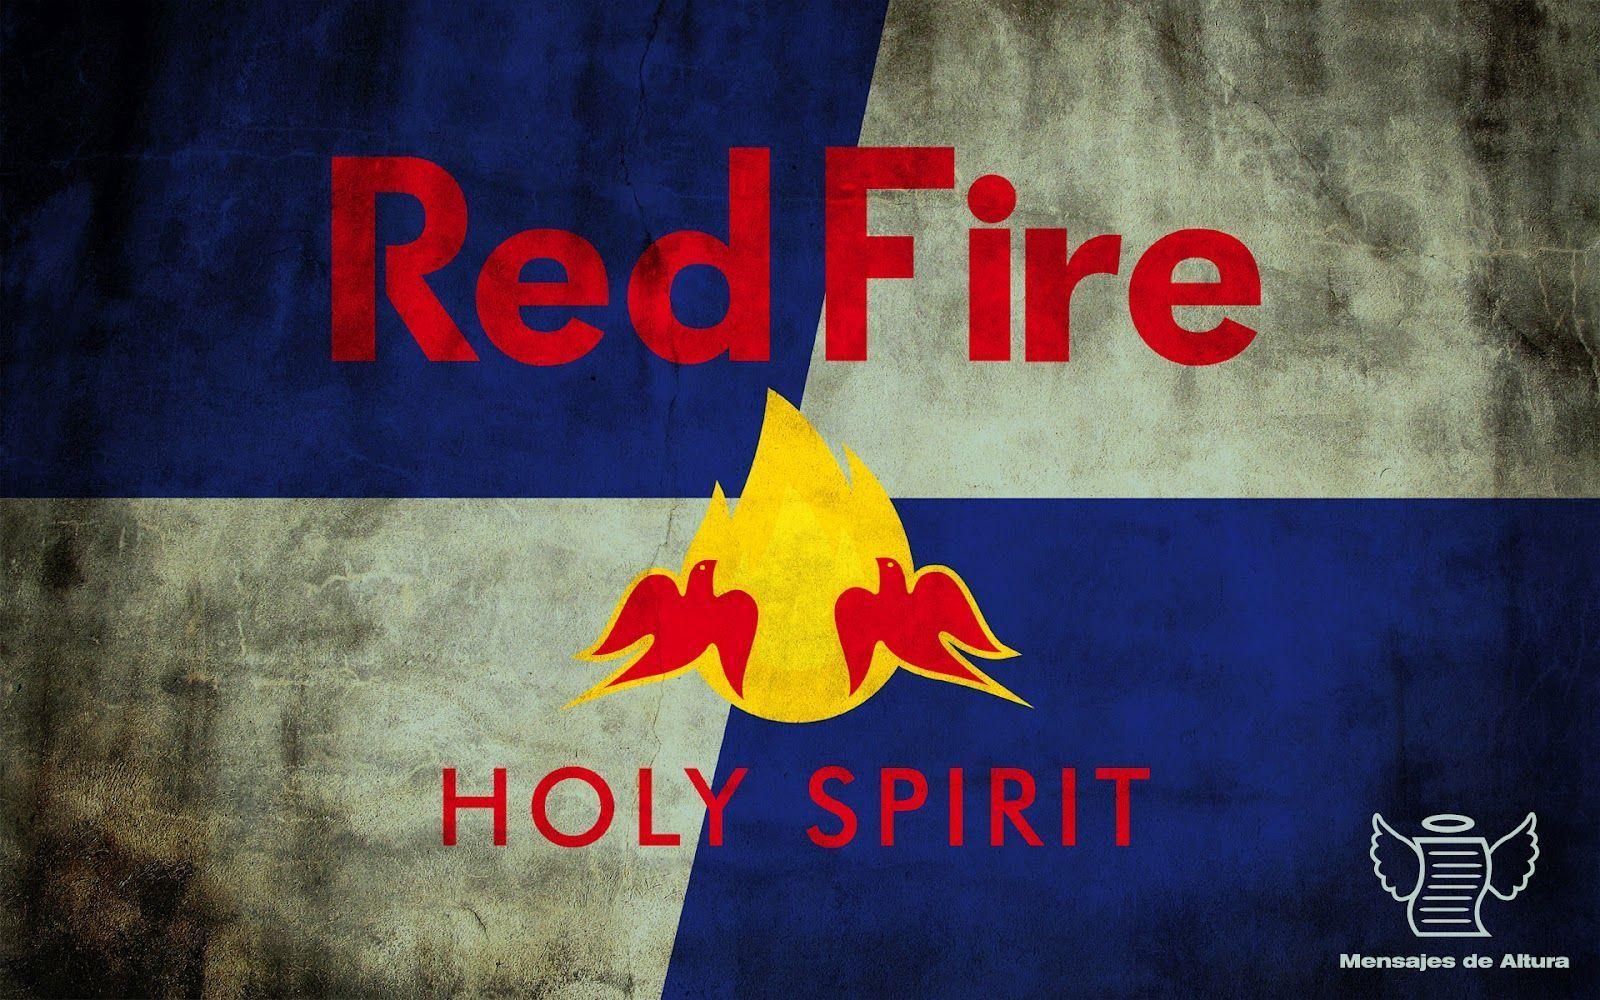 Mensajes de Altura: Red Fire holy spirit wallpaper